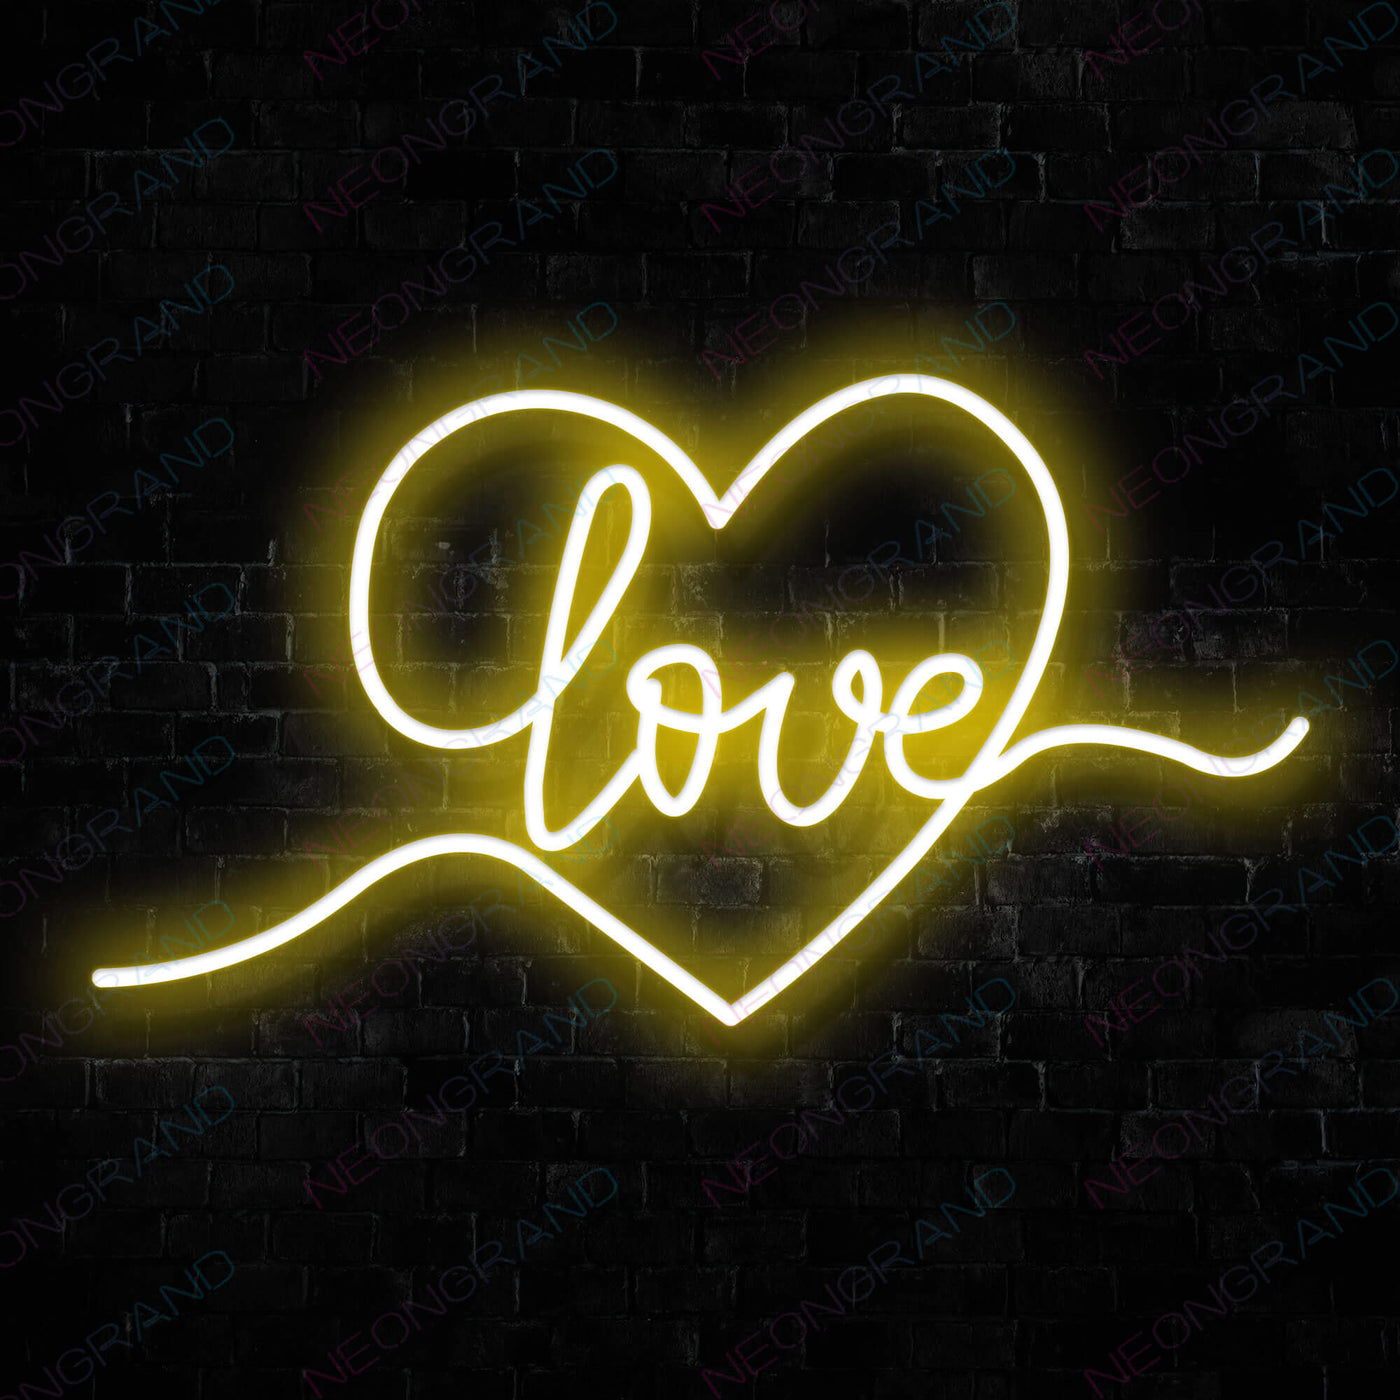 Heart Love Neon Sign Led Light yellow